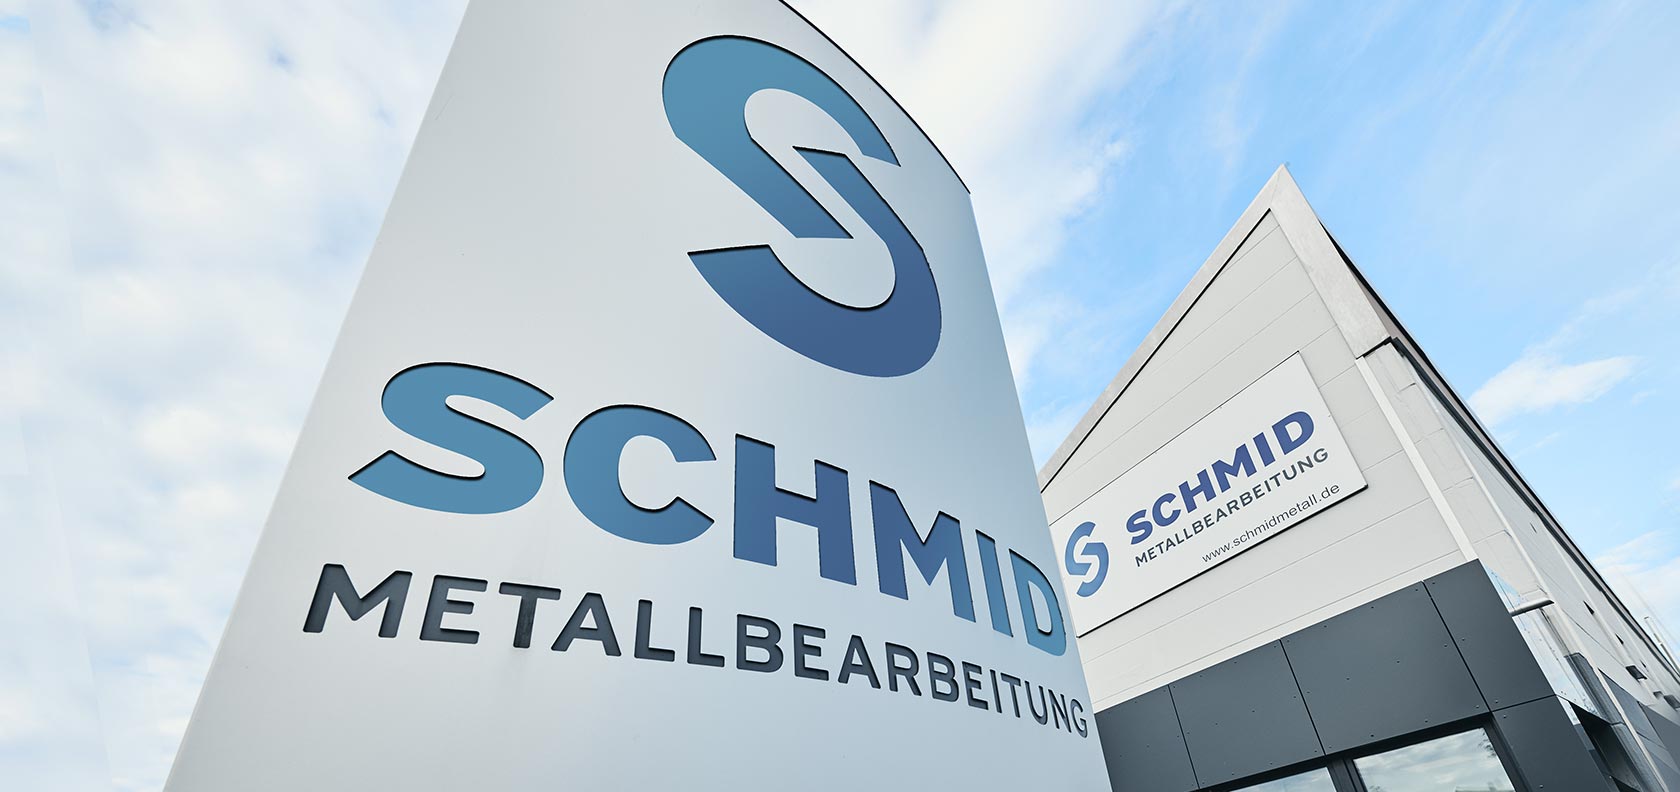 Schmid Metallbearbeitung corporate design - signage